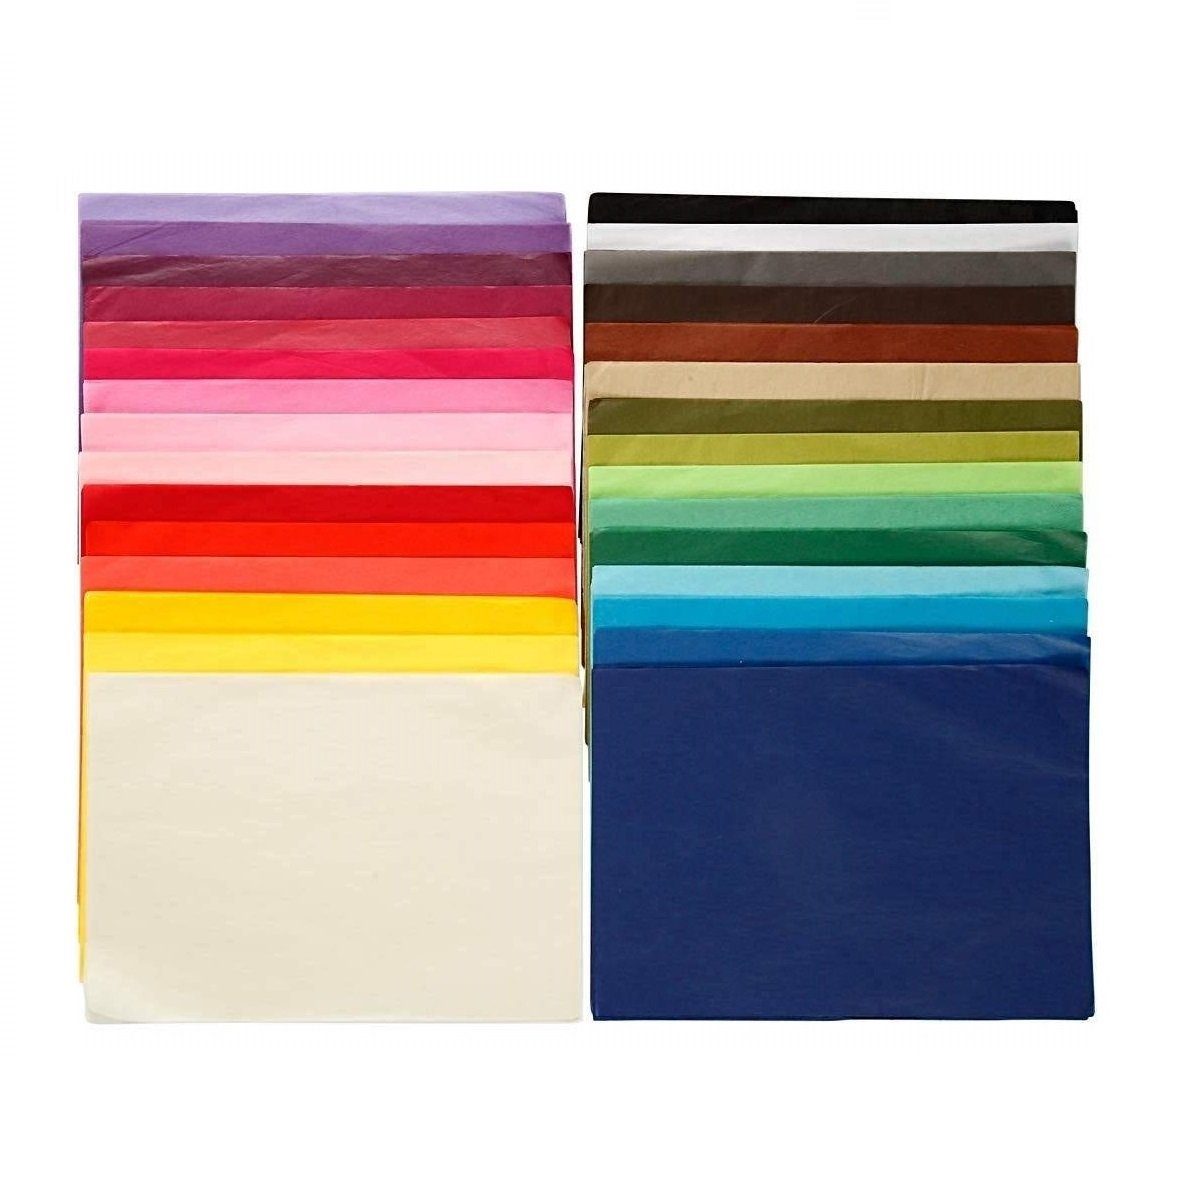 -, Transparentes company mit 300 Seidenpapier 30 20914, Blatt Farbe Blatt verschiedenen Seidenpapier creativ - Farben Pro 10